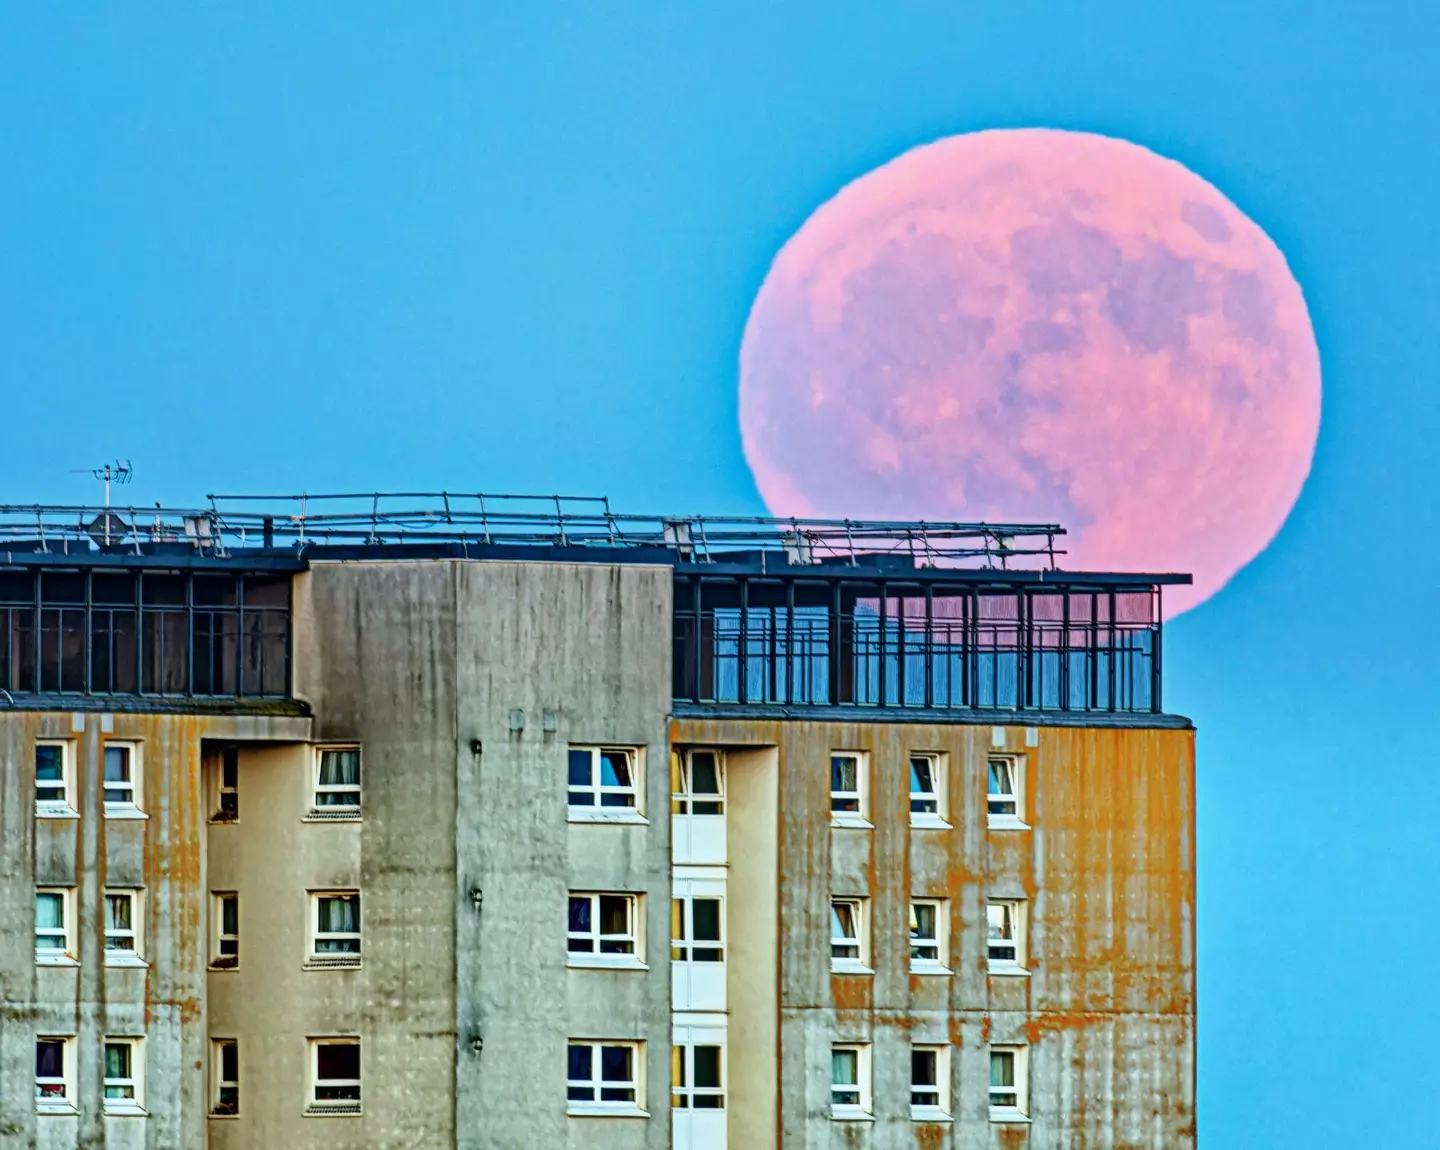 Shots of the Full Strawberry Moon were shared across social media.